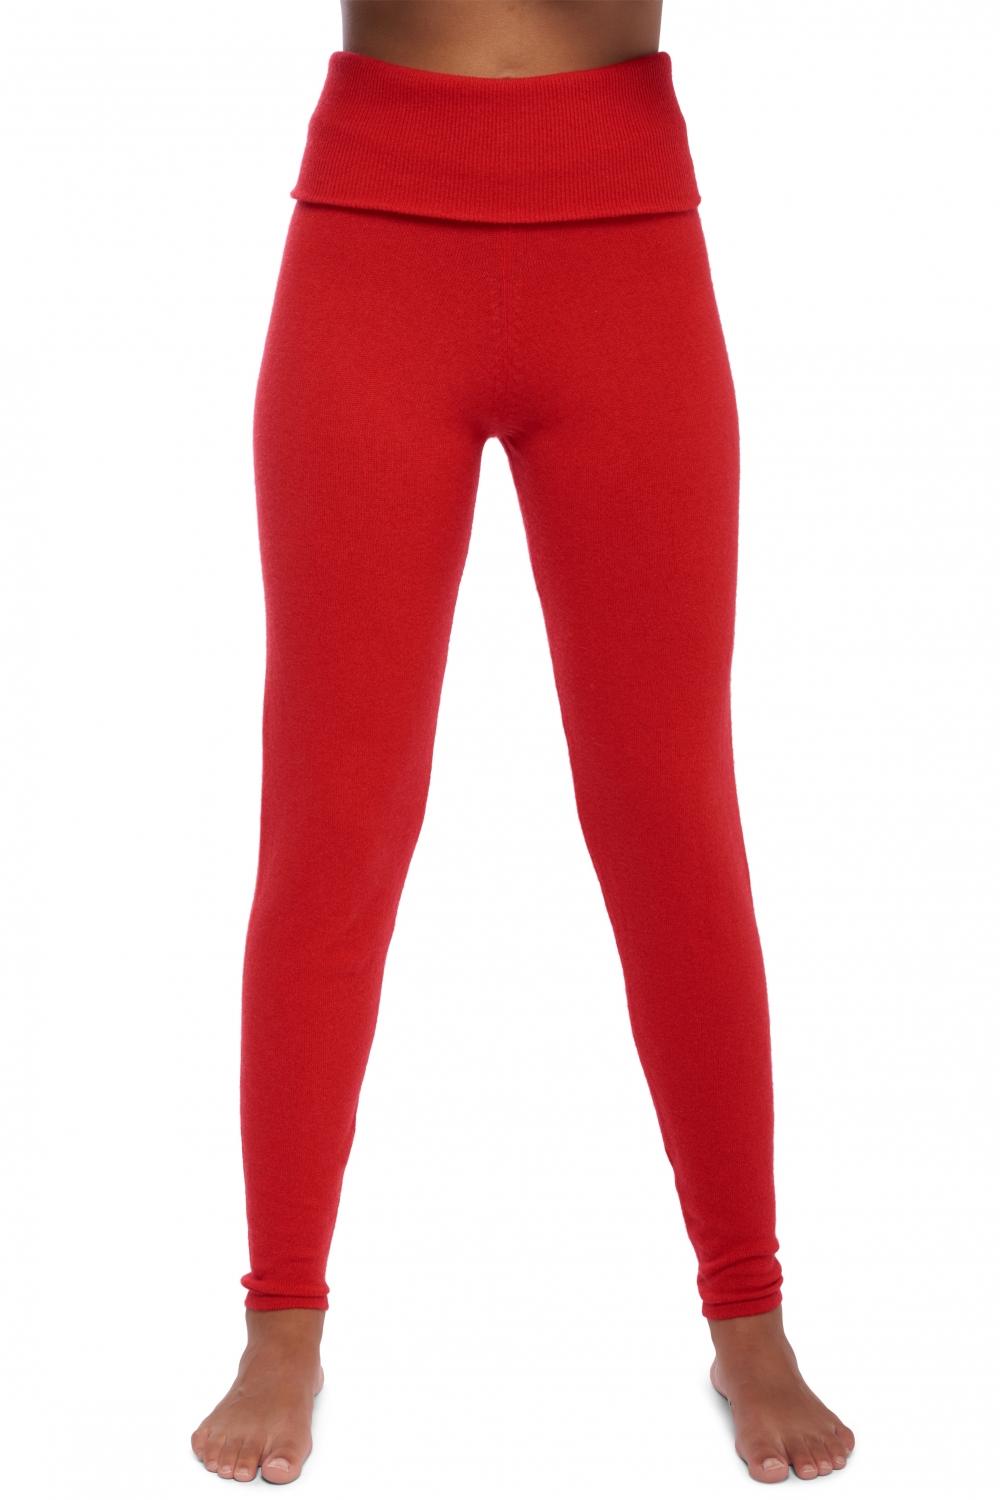 Cashmere accessoires shirley rouge xl